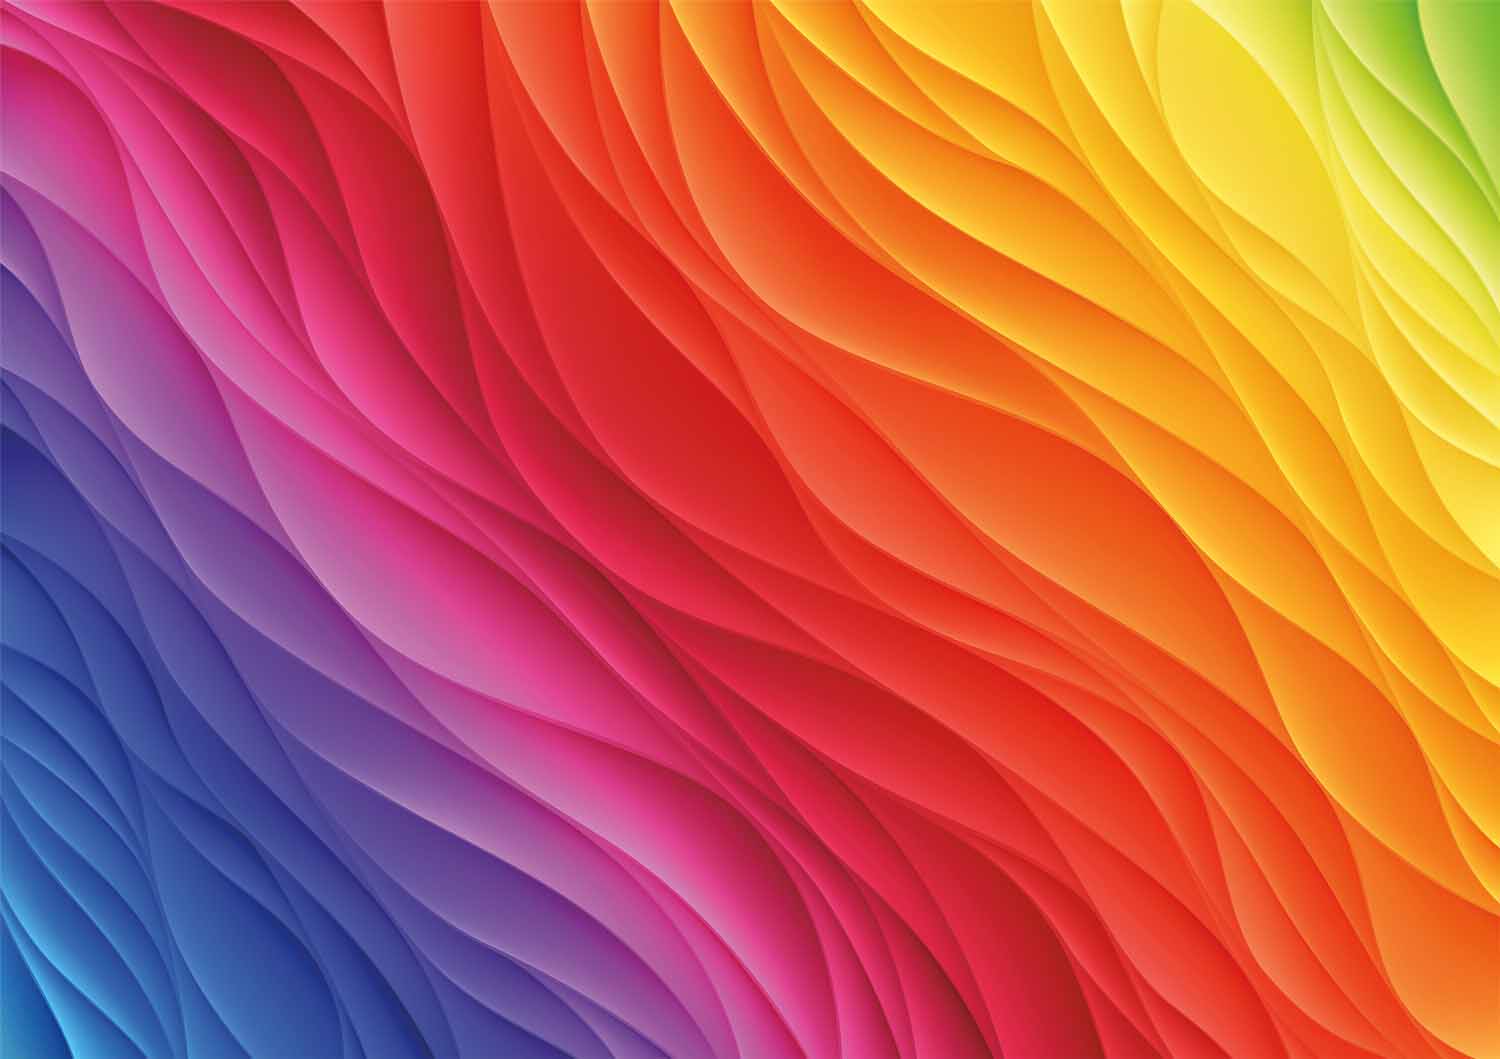 300+] Rainbow Backgrounds